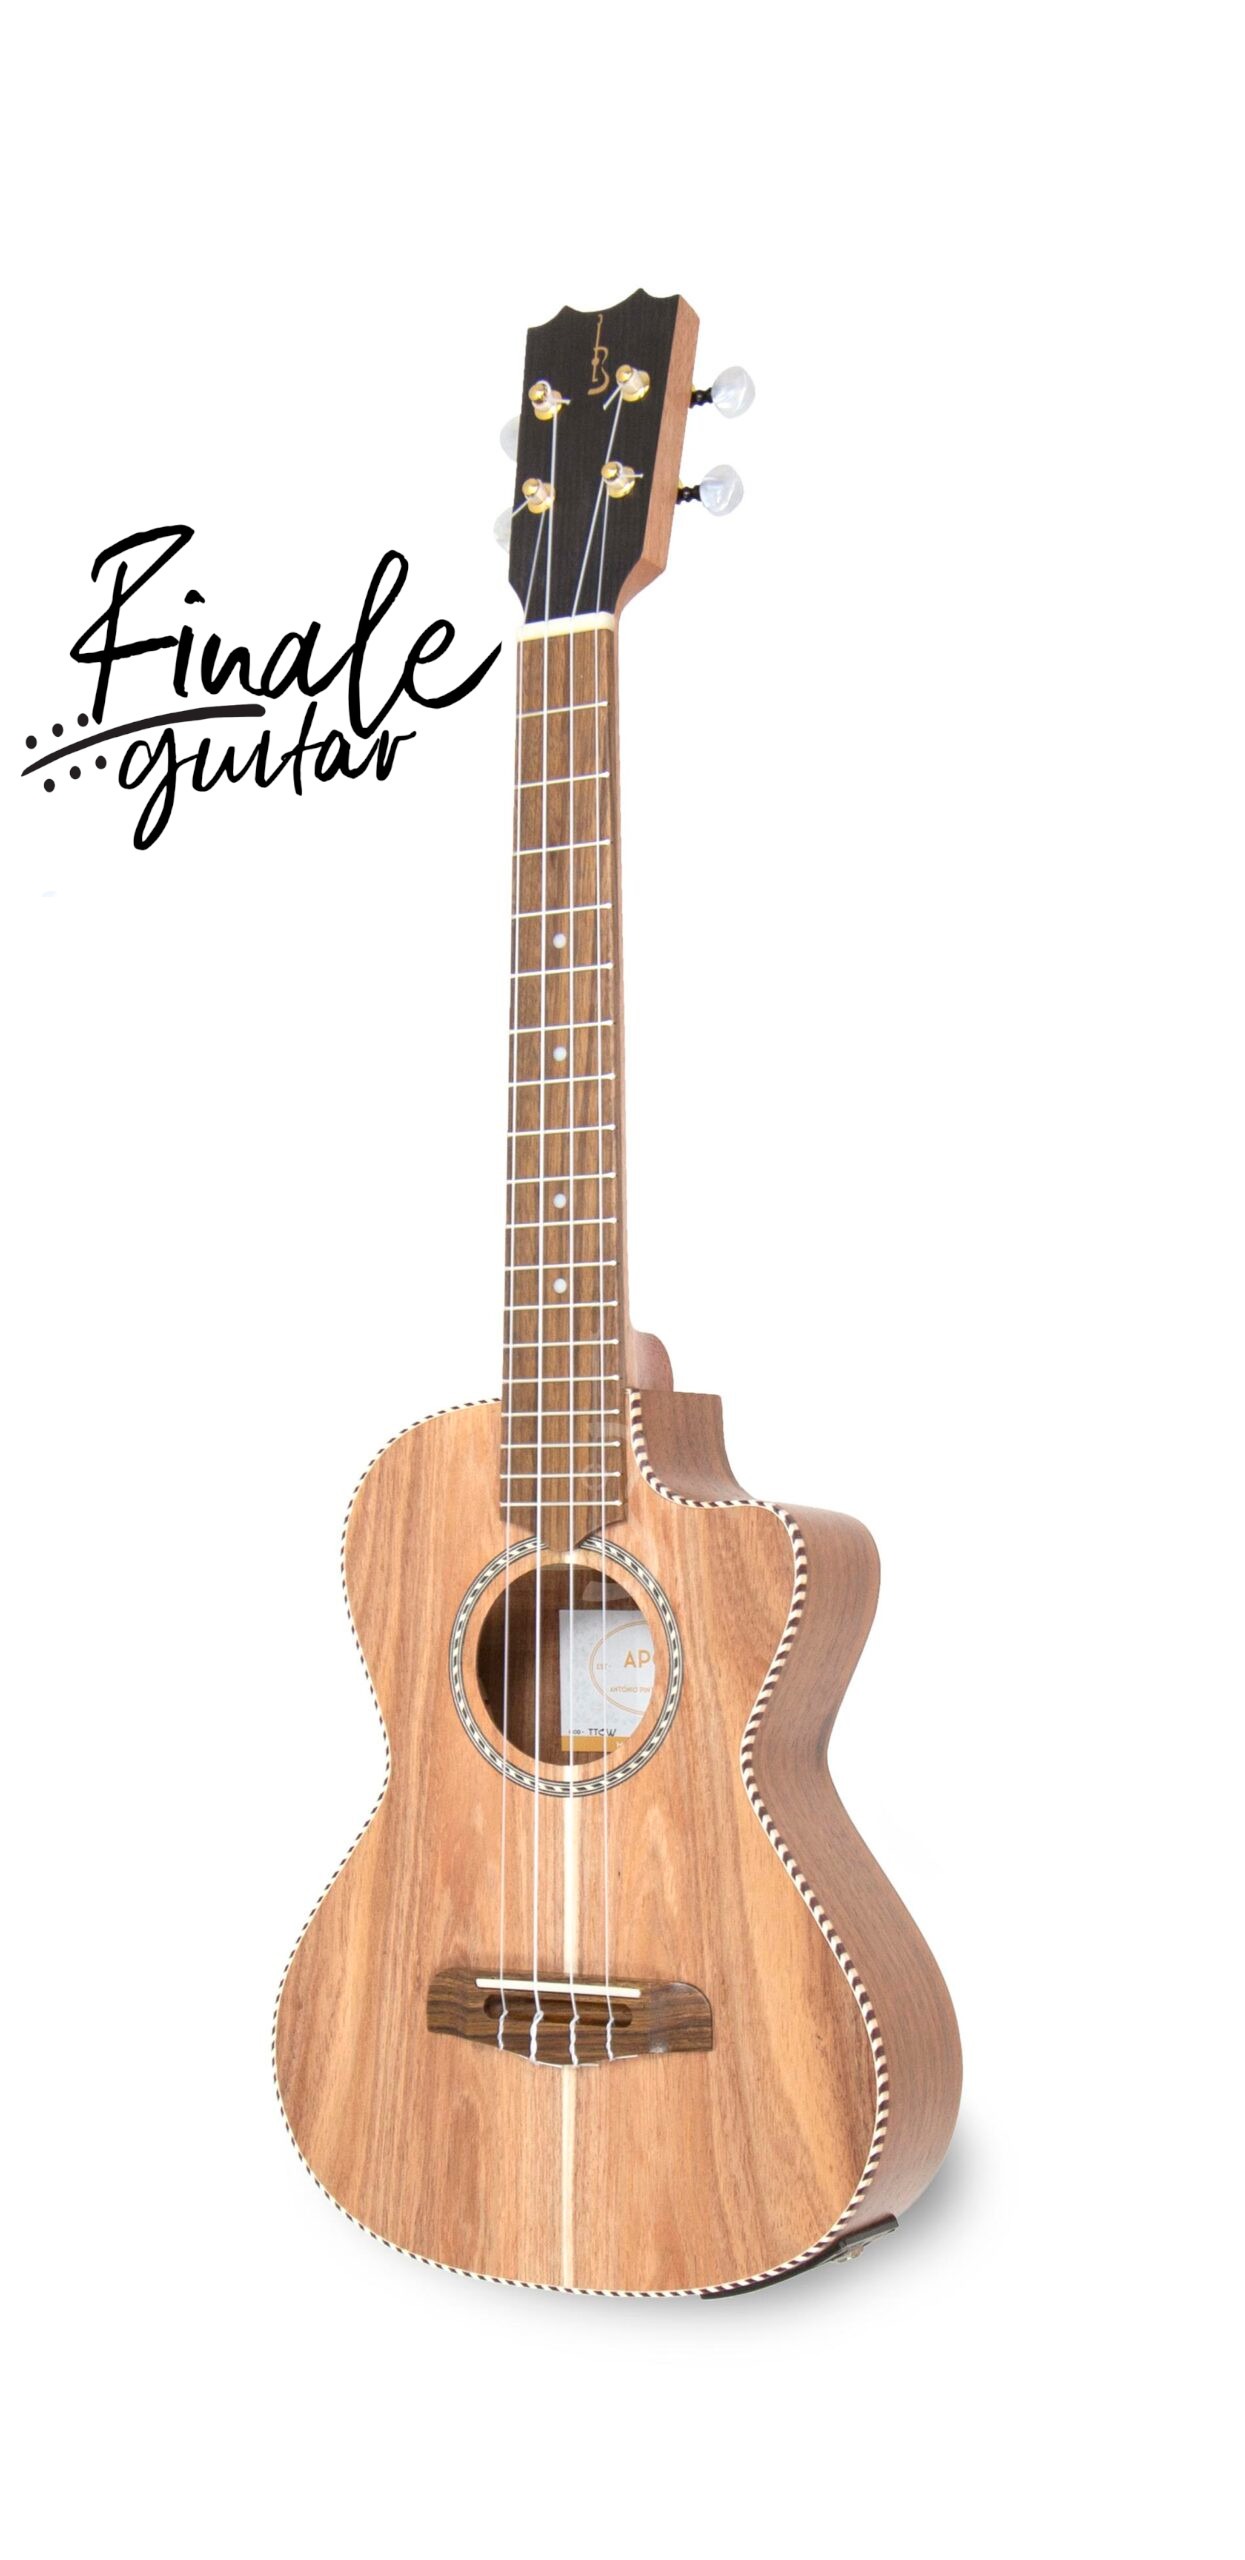 APC TTCW Tenor uke with cutaway for sale in our Sheffield guitar shop, Finale Guitar